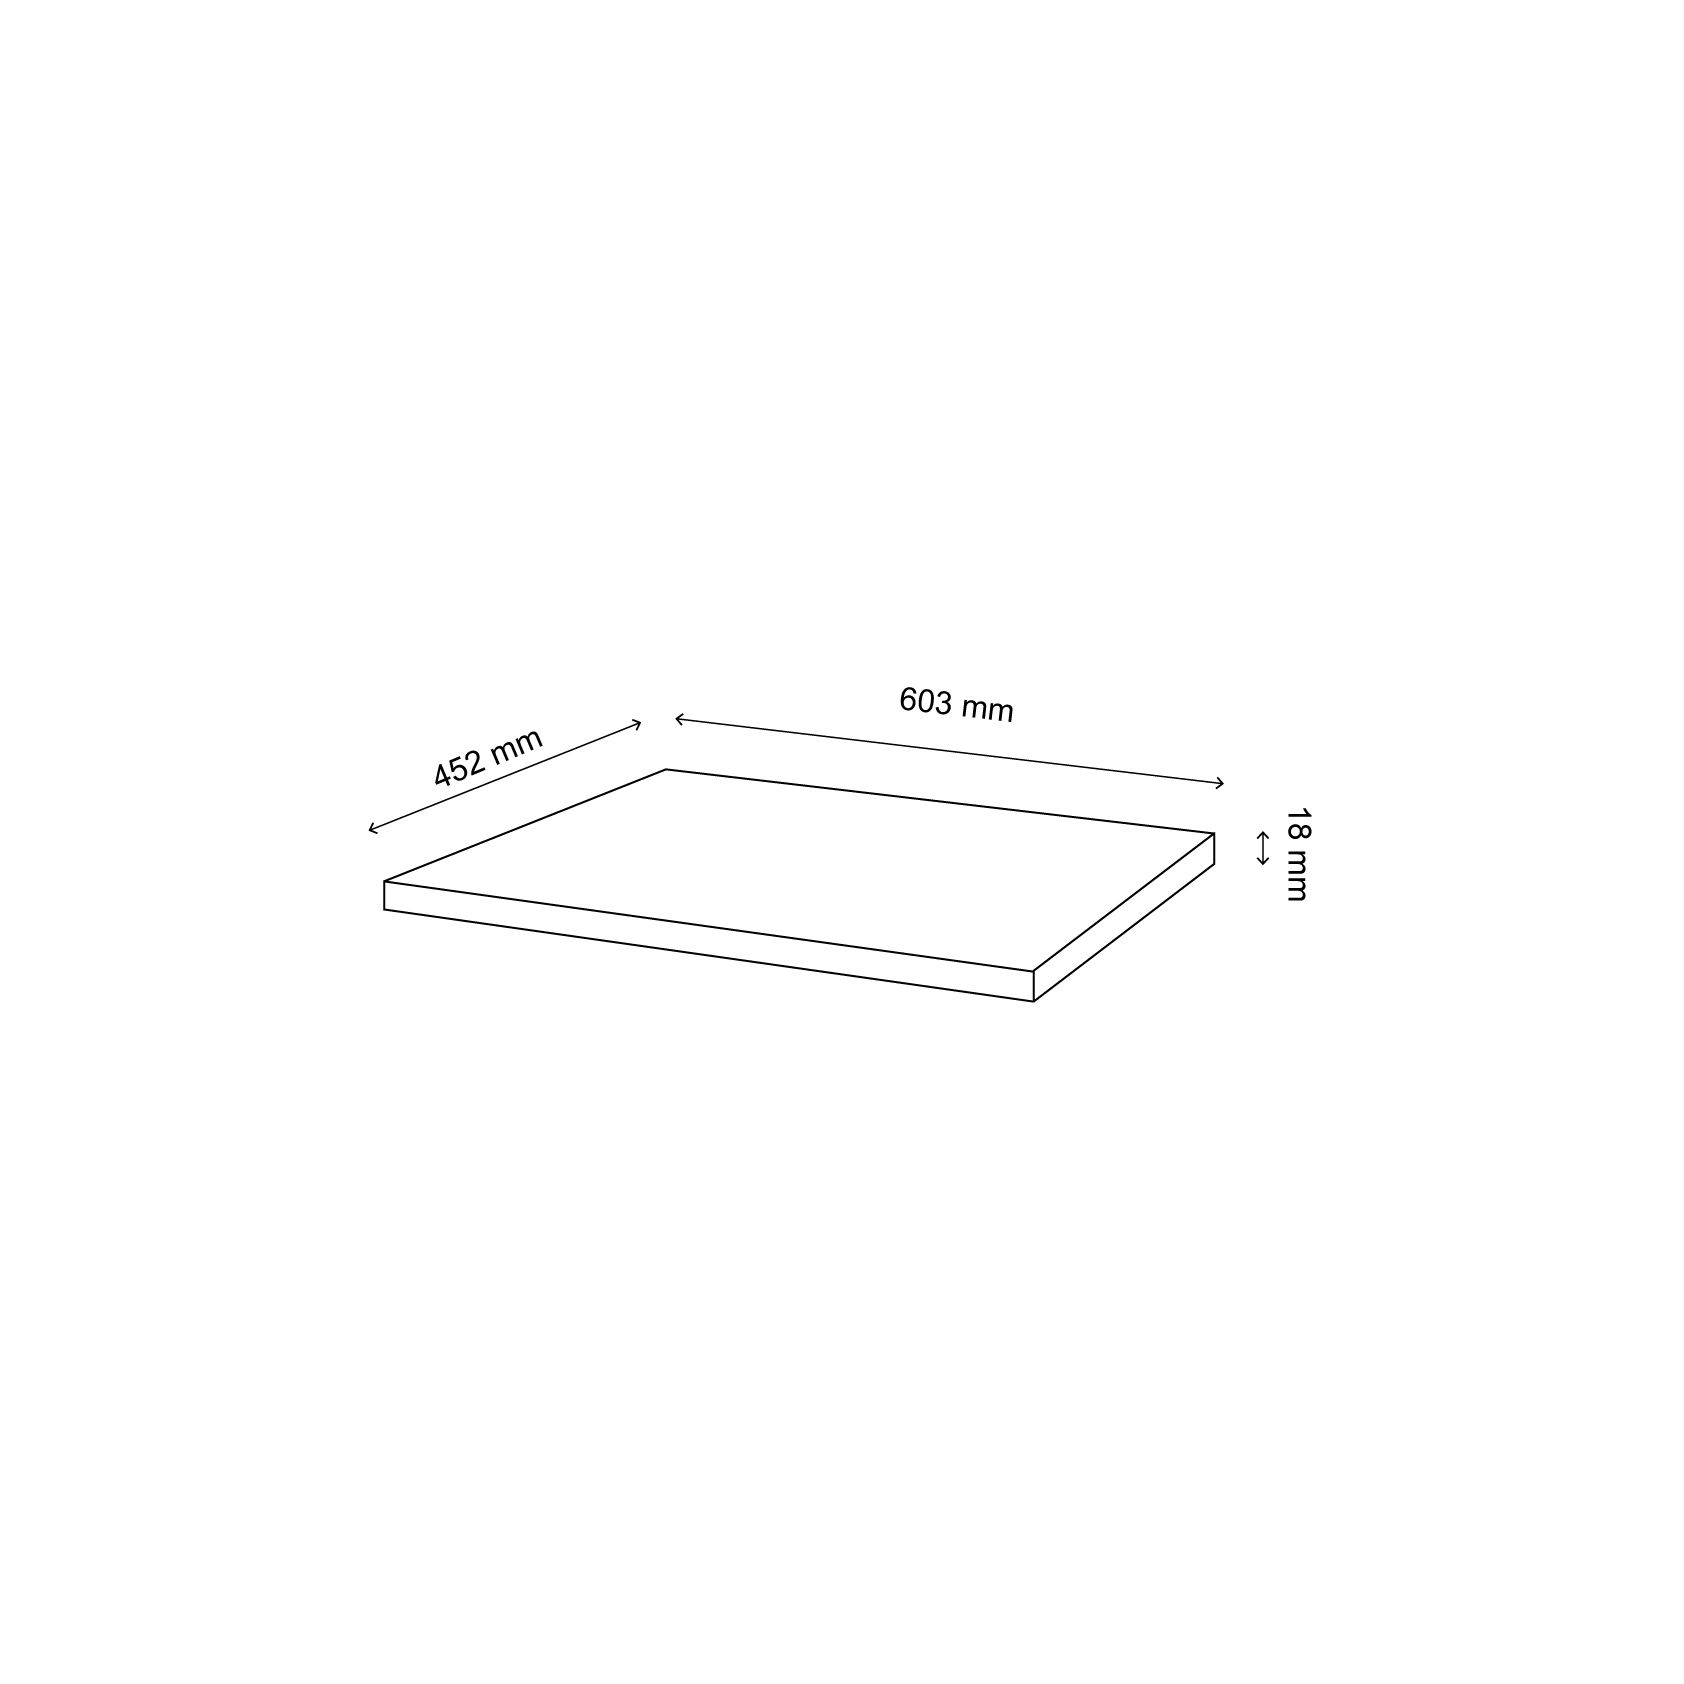 GoodHome Cadelia Matt Black Square edge Chipboard & laminate Bathroom Worktop (T) 2cm x (L) 60.5cm x (W) 45.5cm